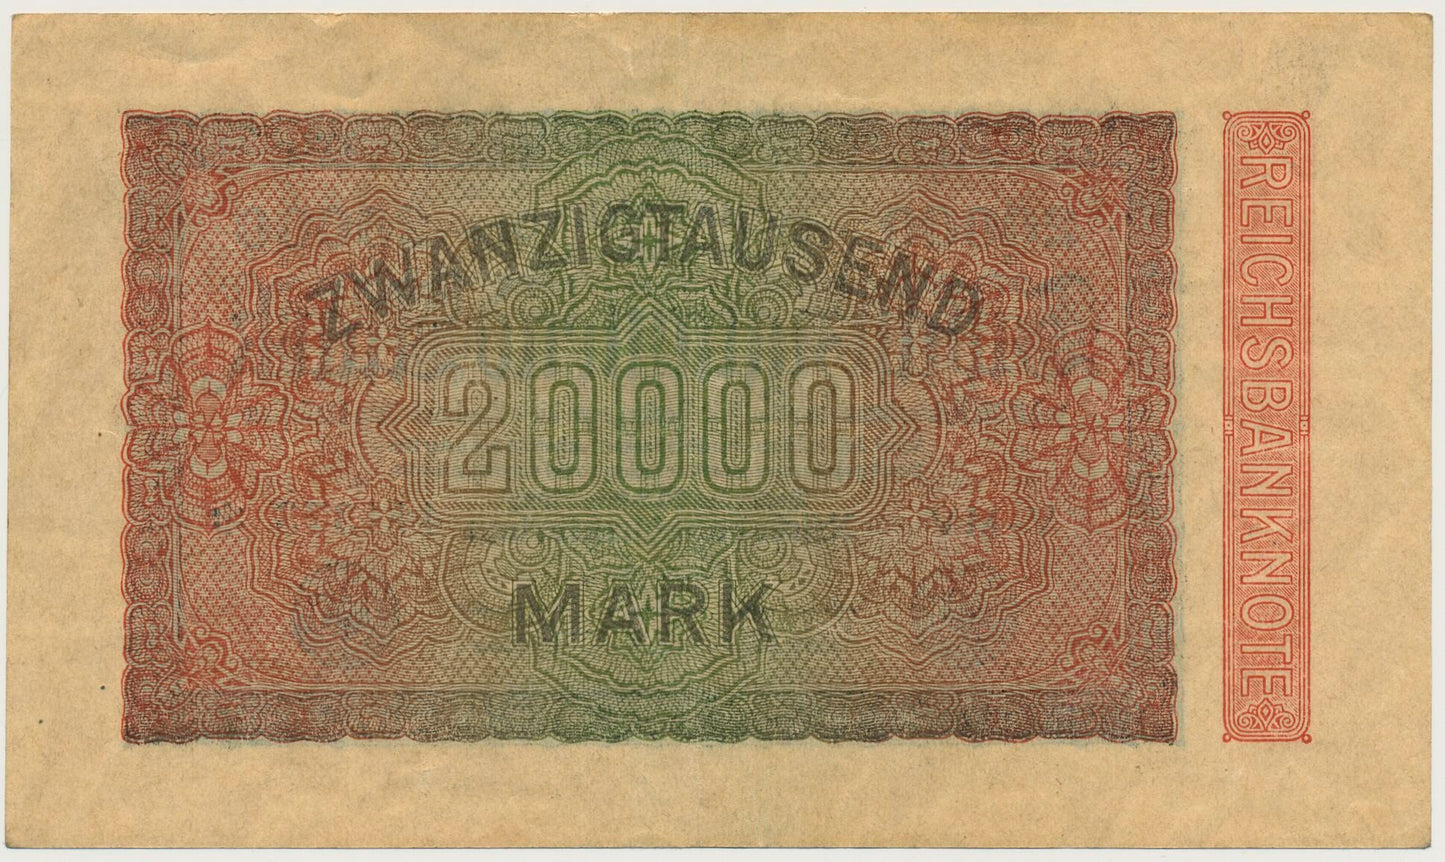 GERMANY P.85b 1923 20,000 Mark VF